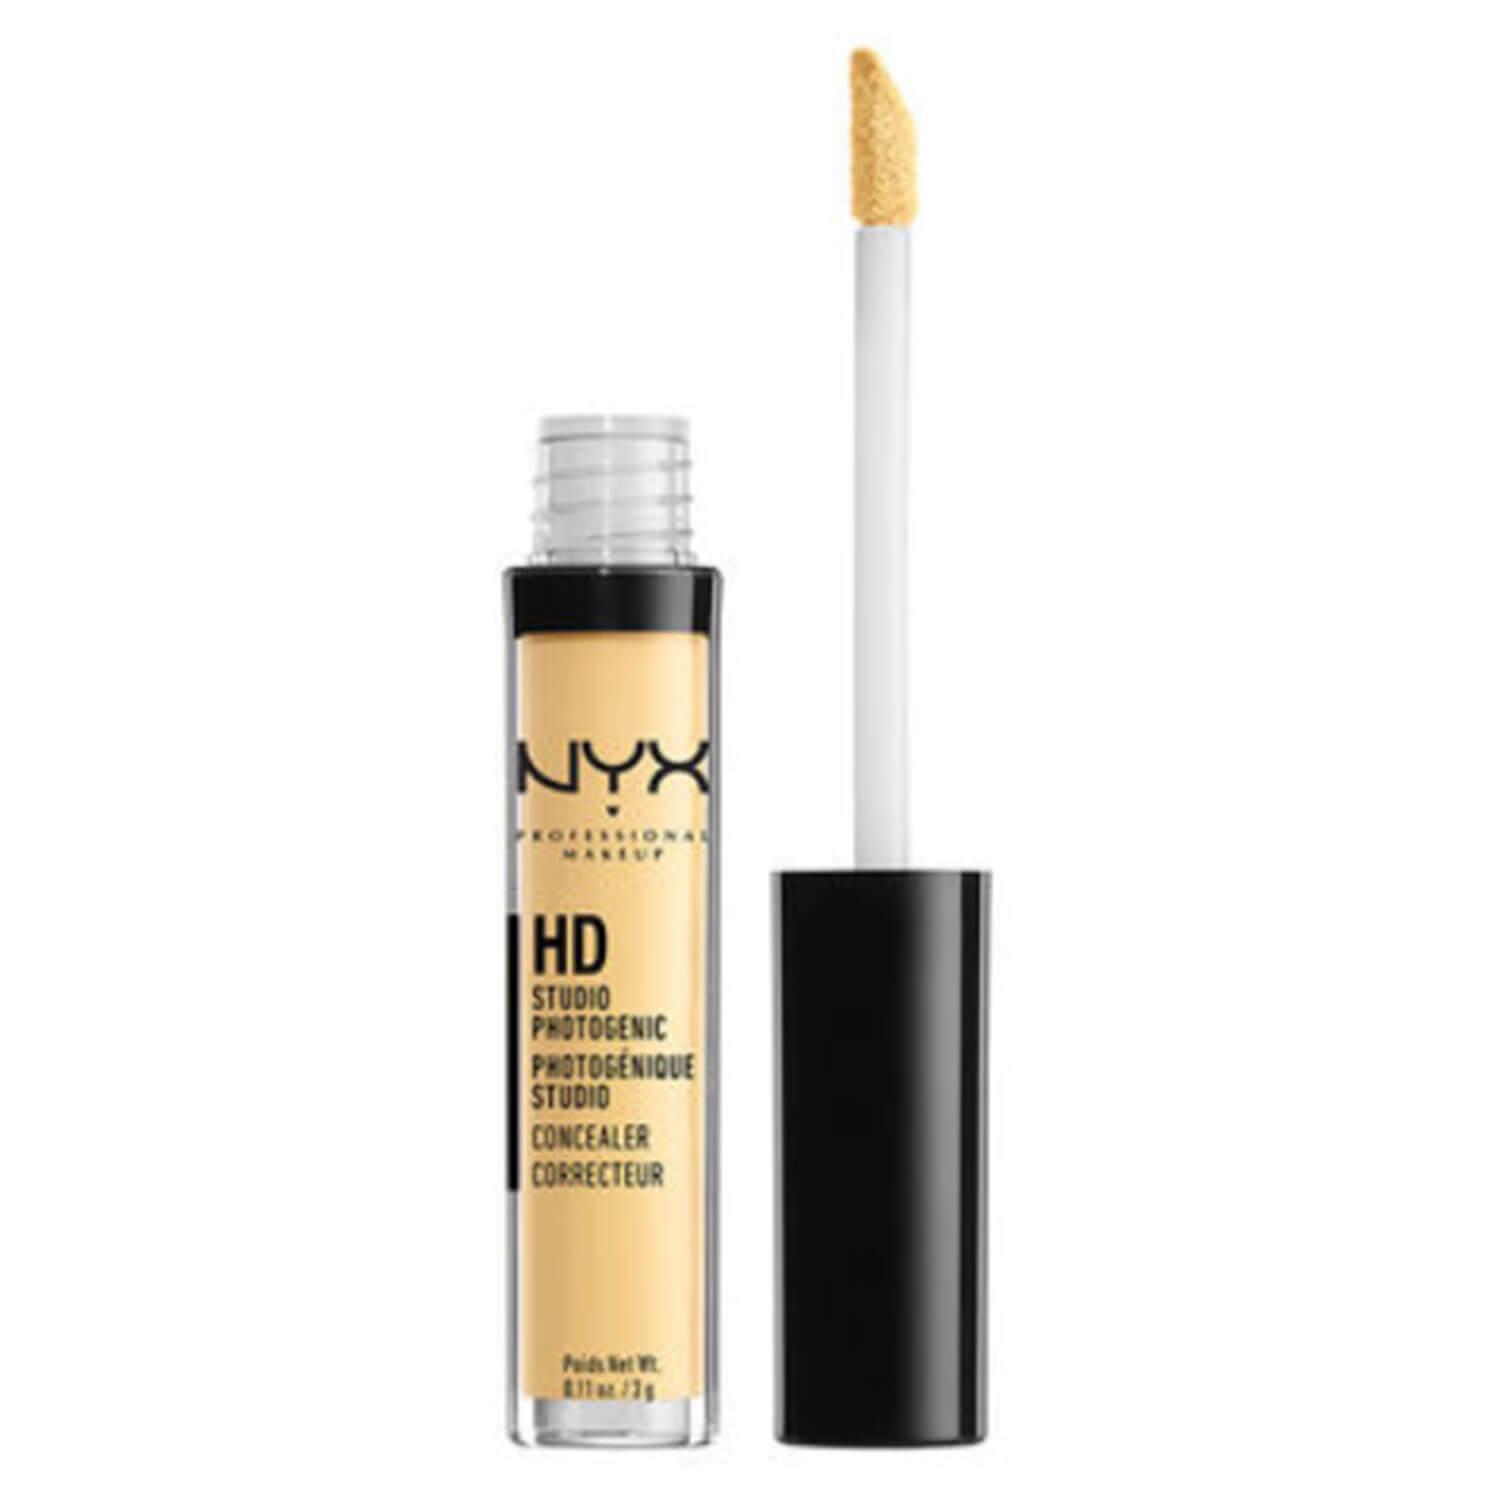 NYX Concealer - HD Photogenic Wand Yellow